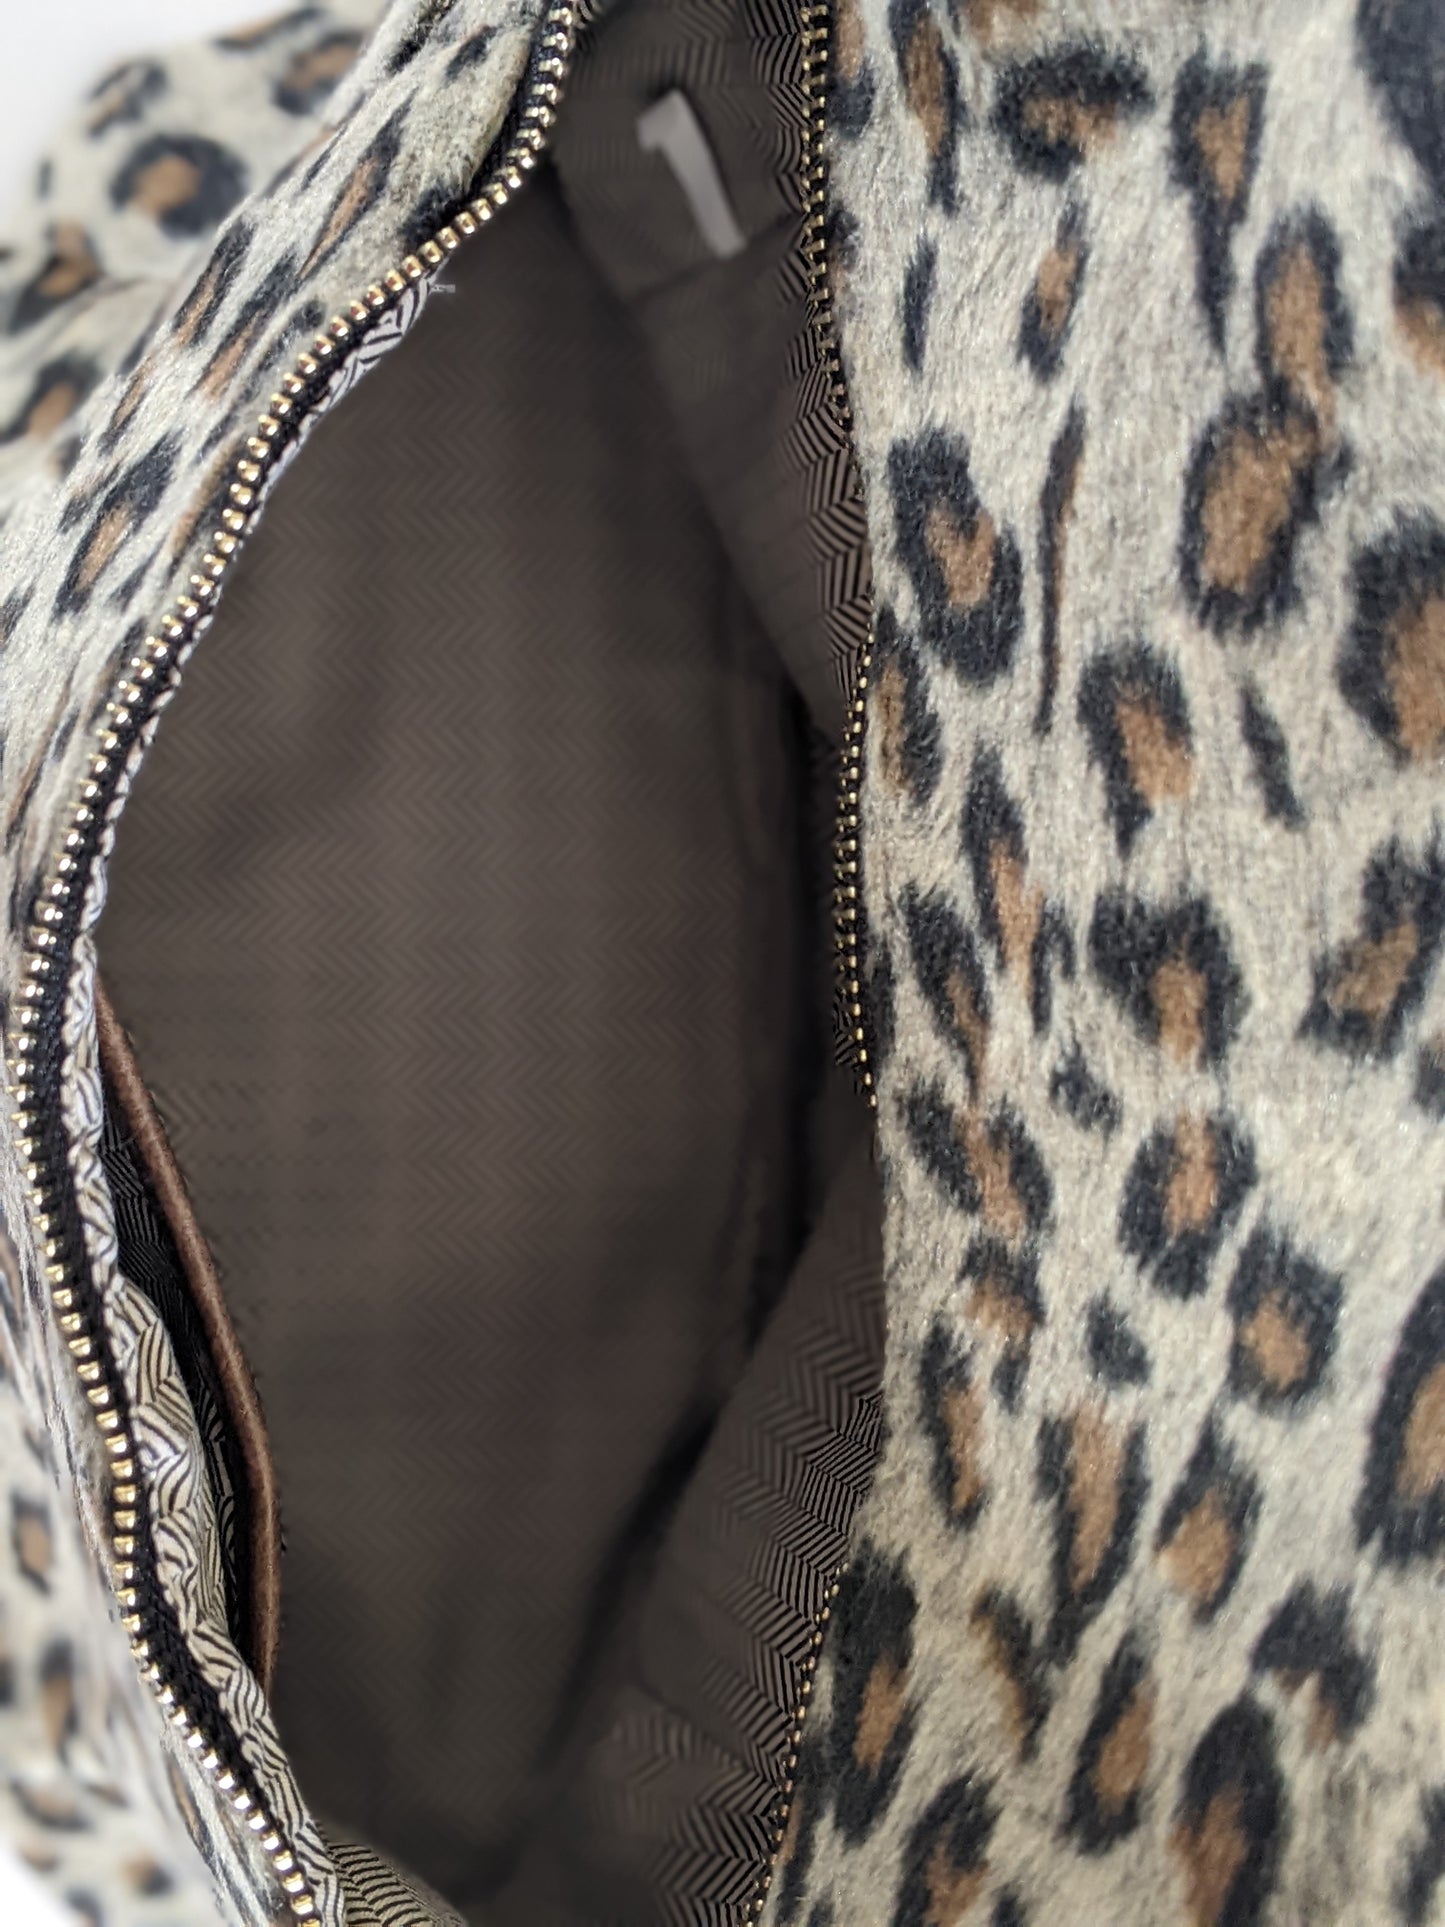 Cheetah Print Backpack Tote